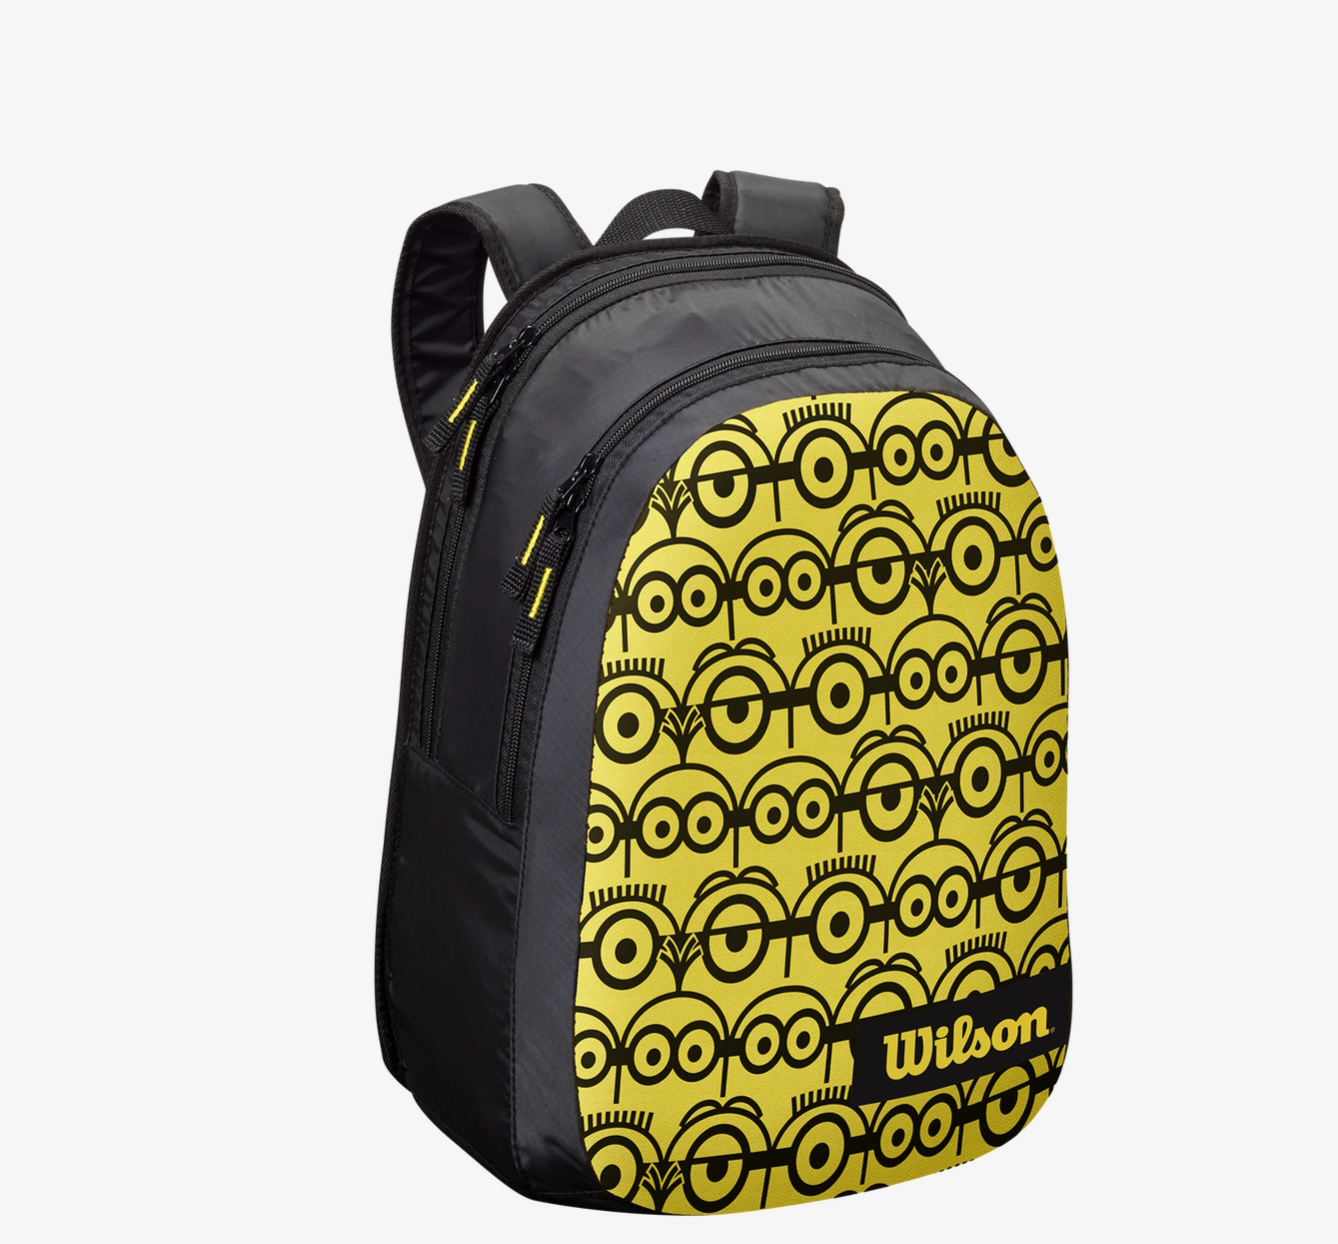 Wilson backpack